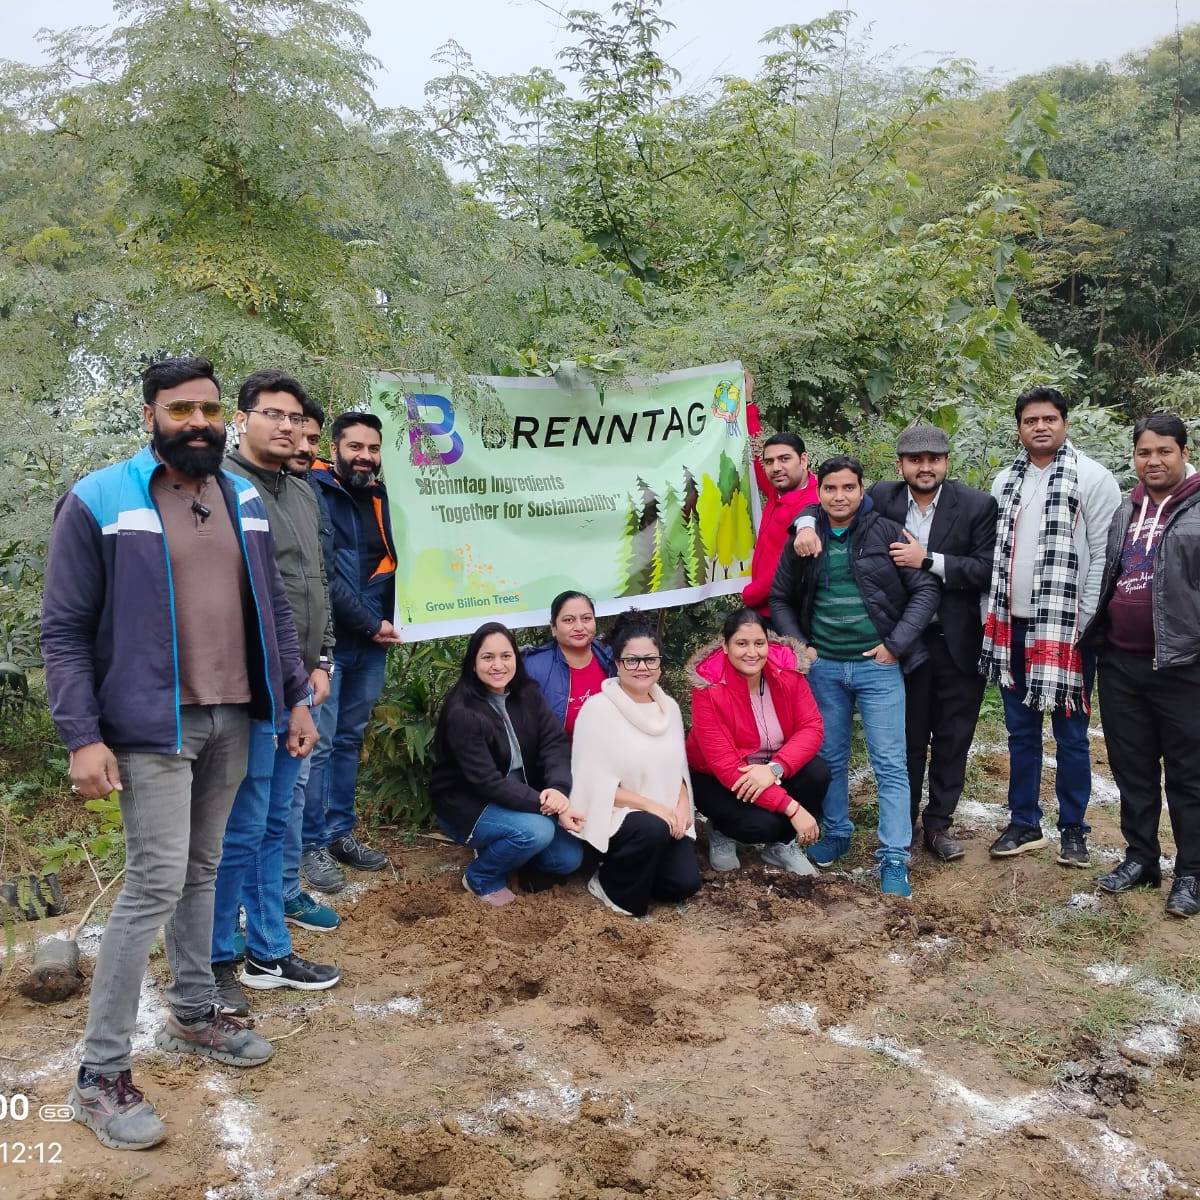 “Green Initiative Milestone: Miyawaki Pocket Forest Takes Root in Kangaheri Village with Billion Tree Foundation and Brenntag Partnership”